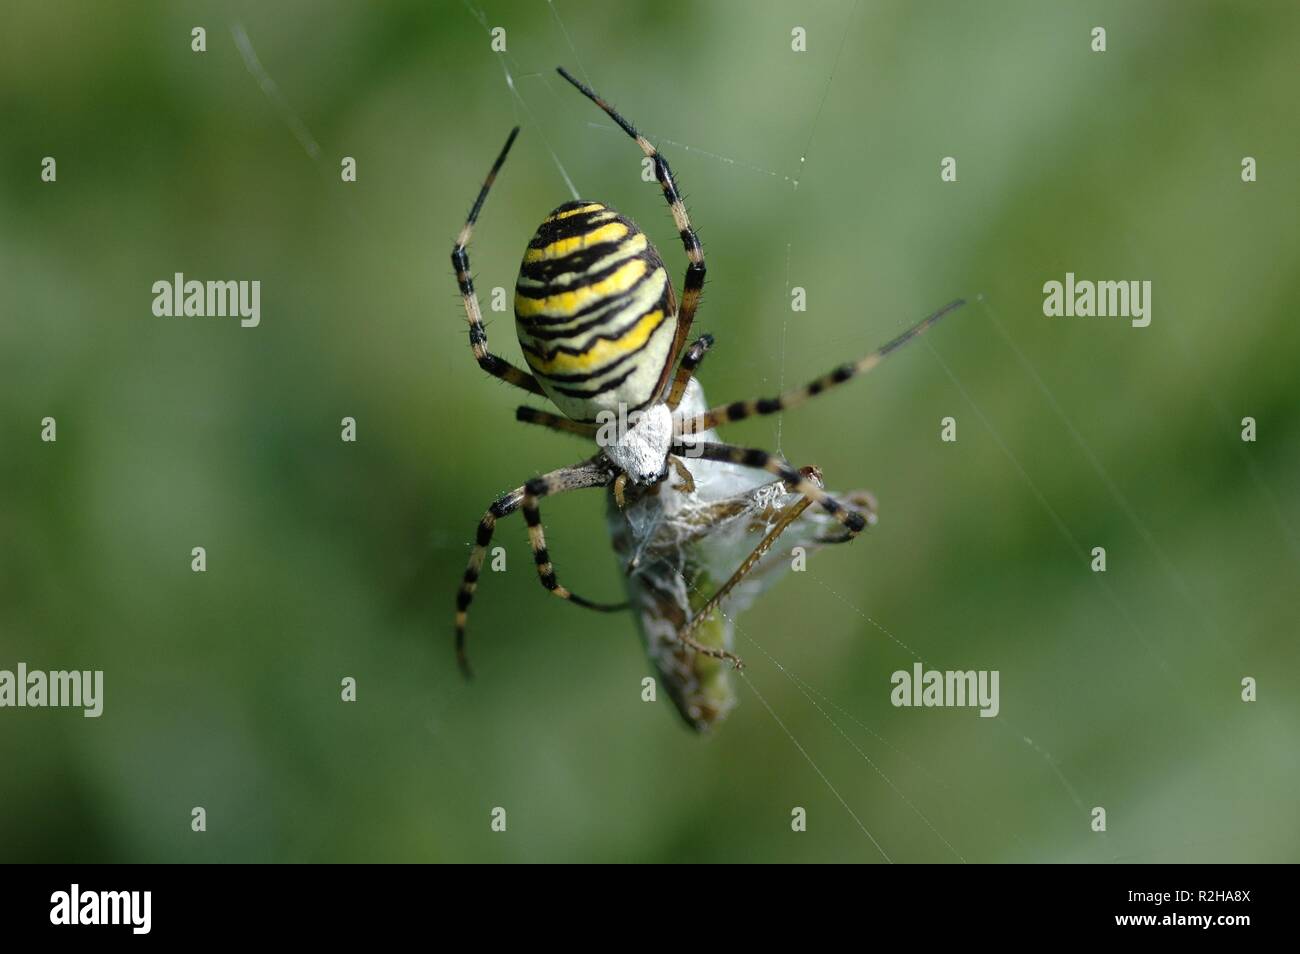 spider m. prey Stock Photo